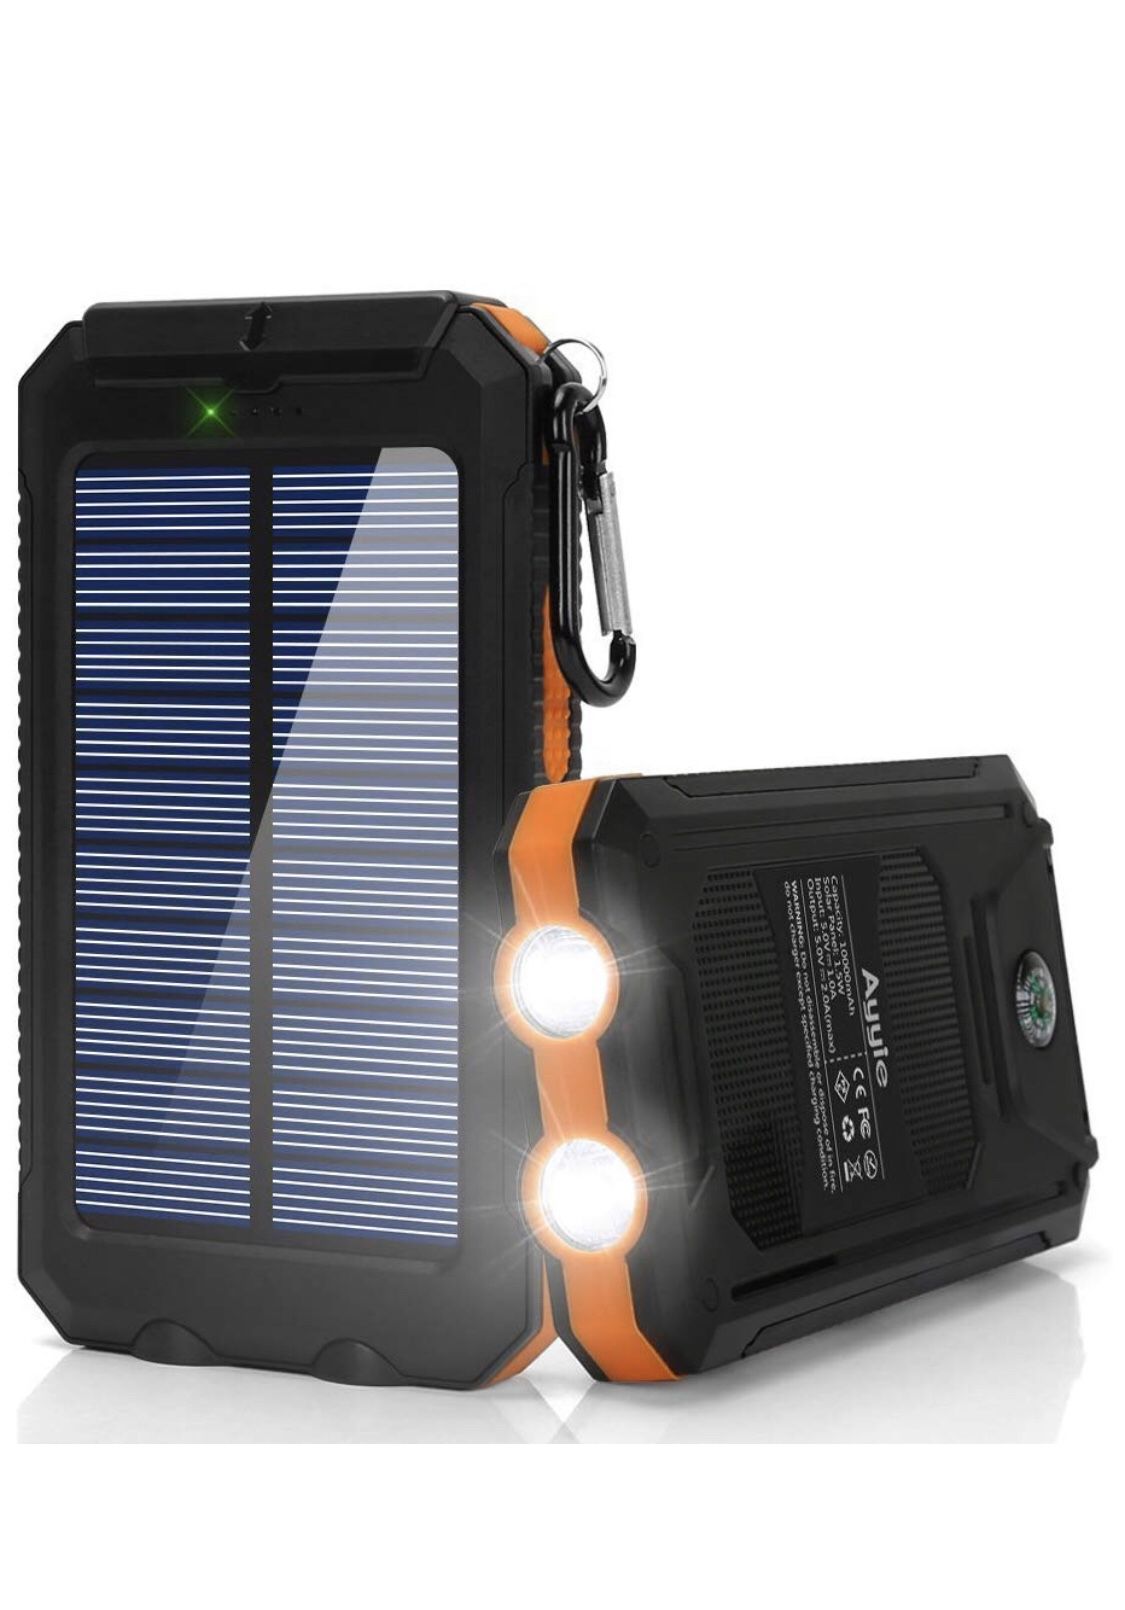 Solar charger battery backup /flashilight 10000 mAh